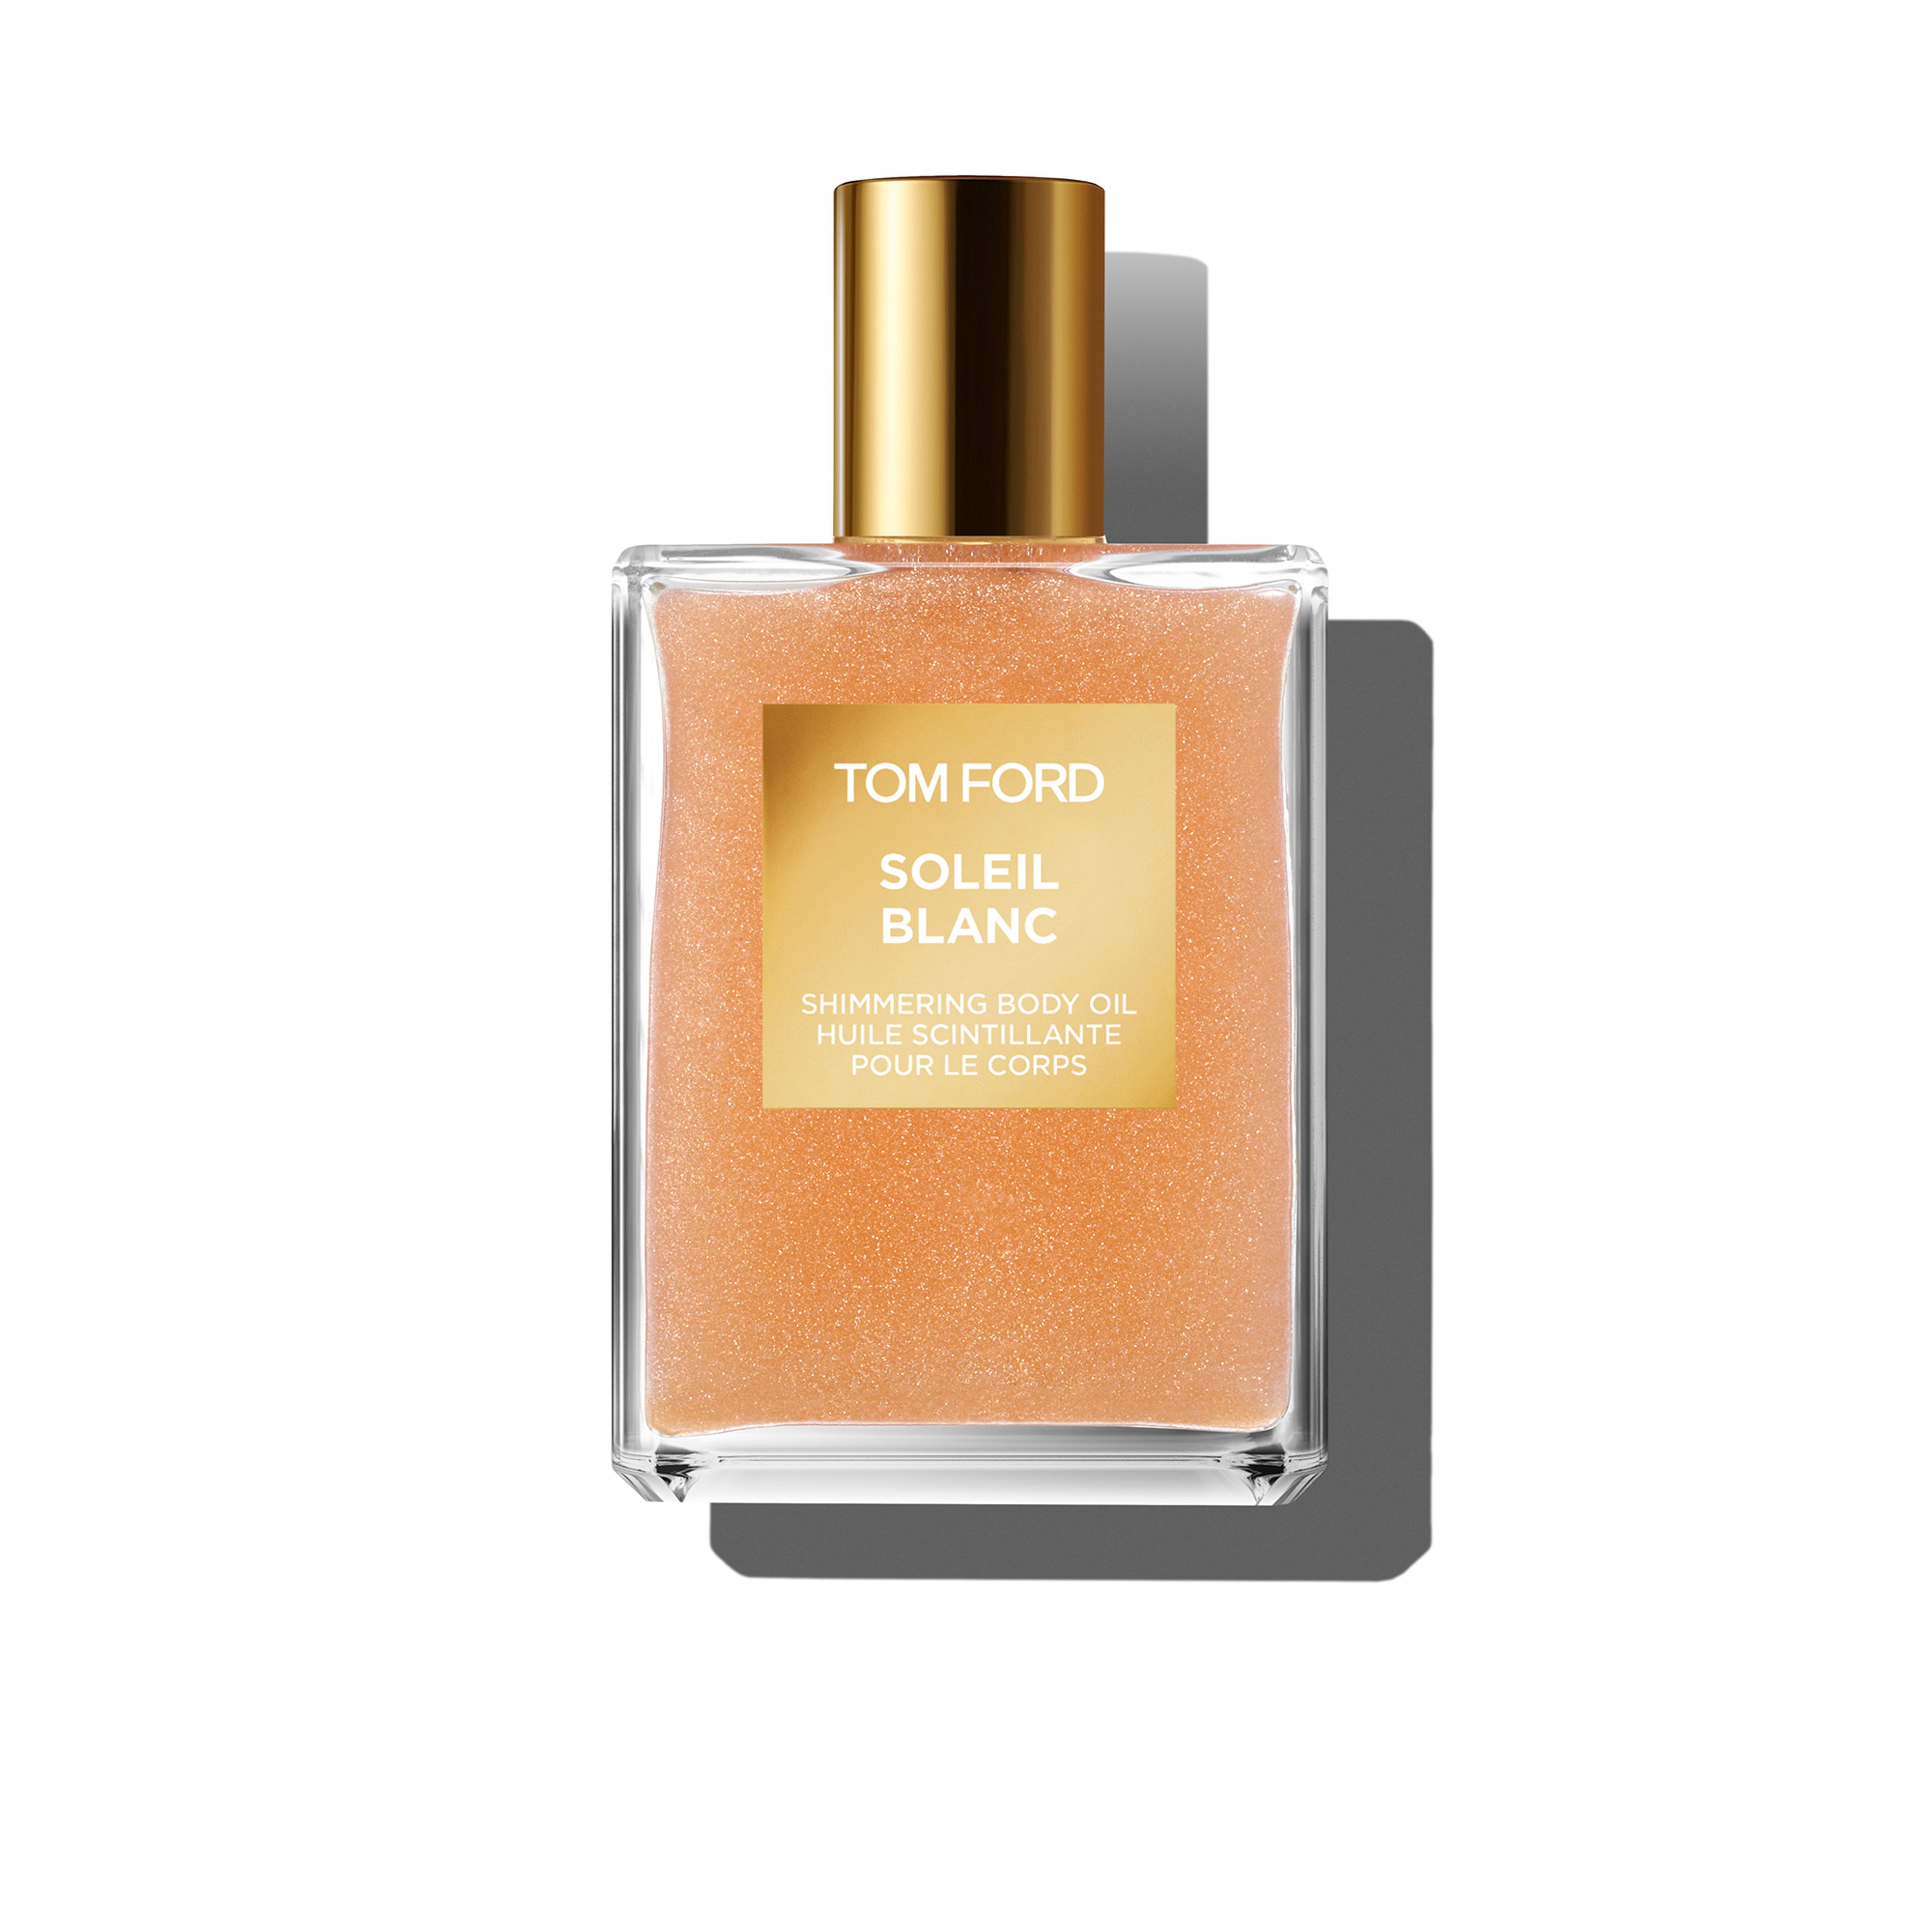 Tom Ford Soleil Blanc Shimmering Body Oil

shade: Rose Gold 7